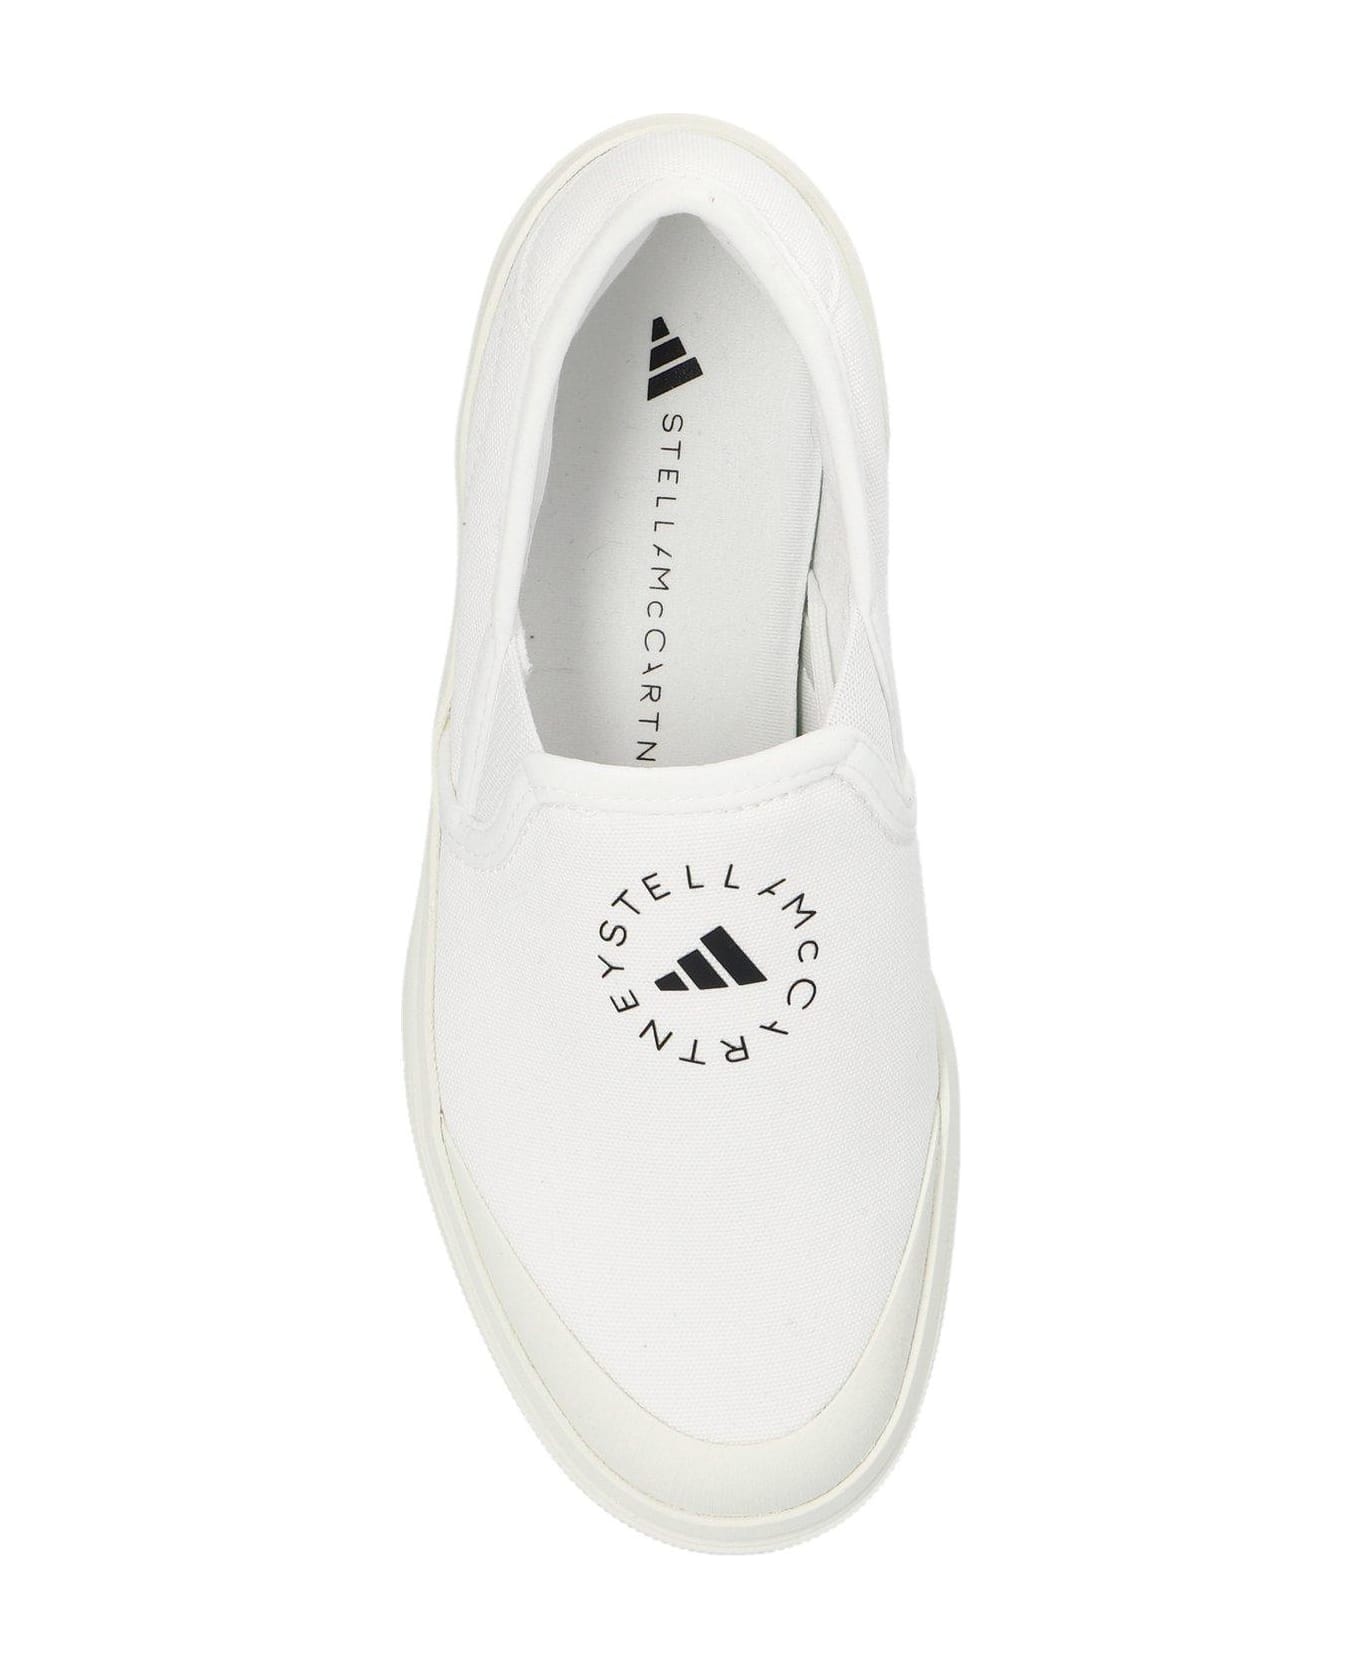 Adidas by Stella McCartney Court Slip-on Sneakers - Ftwwht Ftwwht Cblack